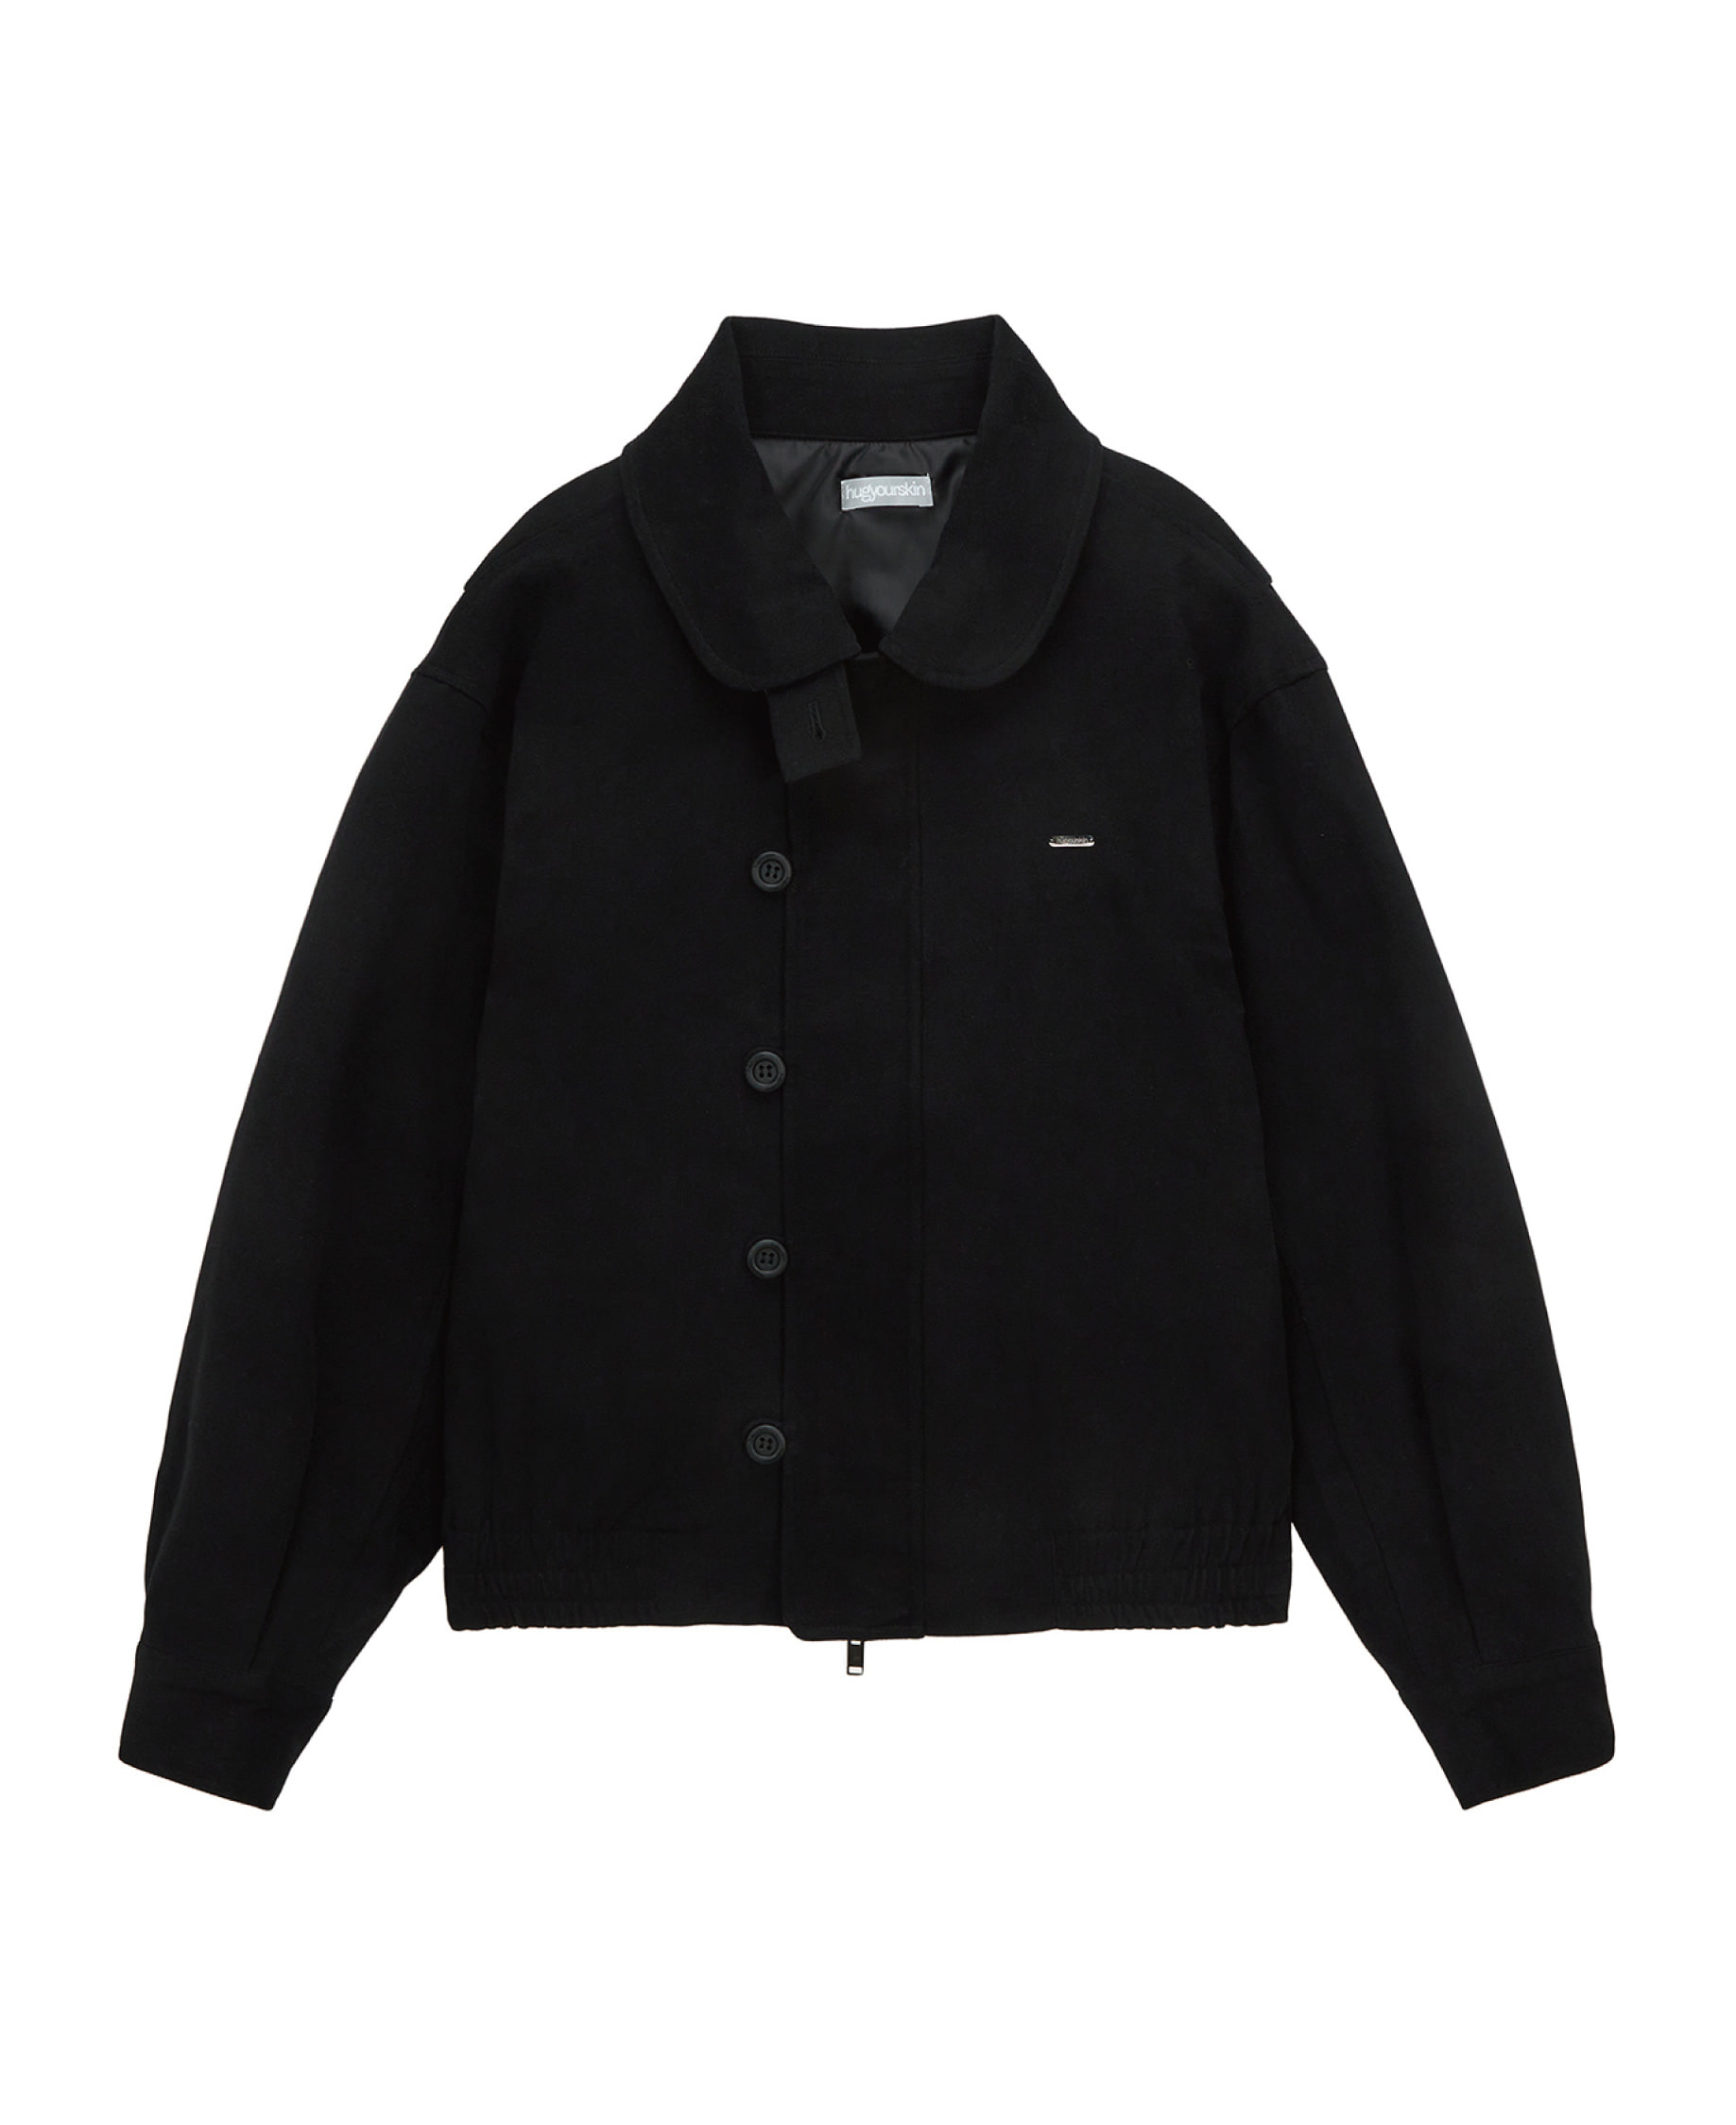 School bomber jacket (black)